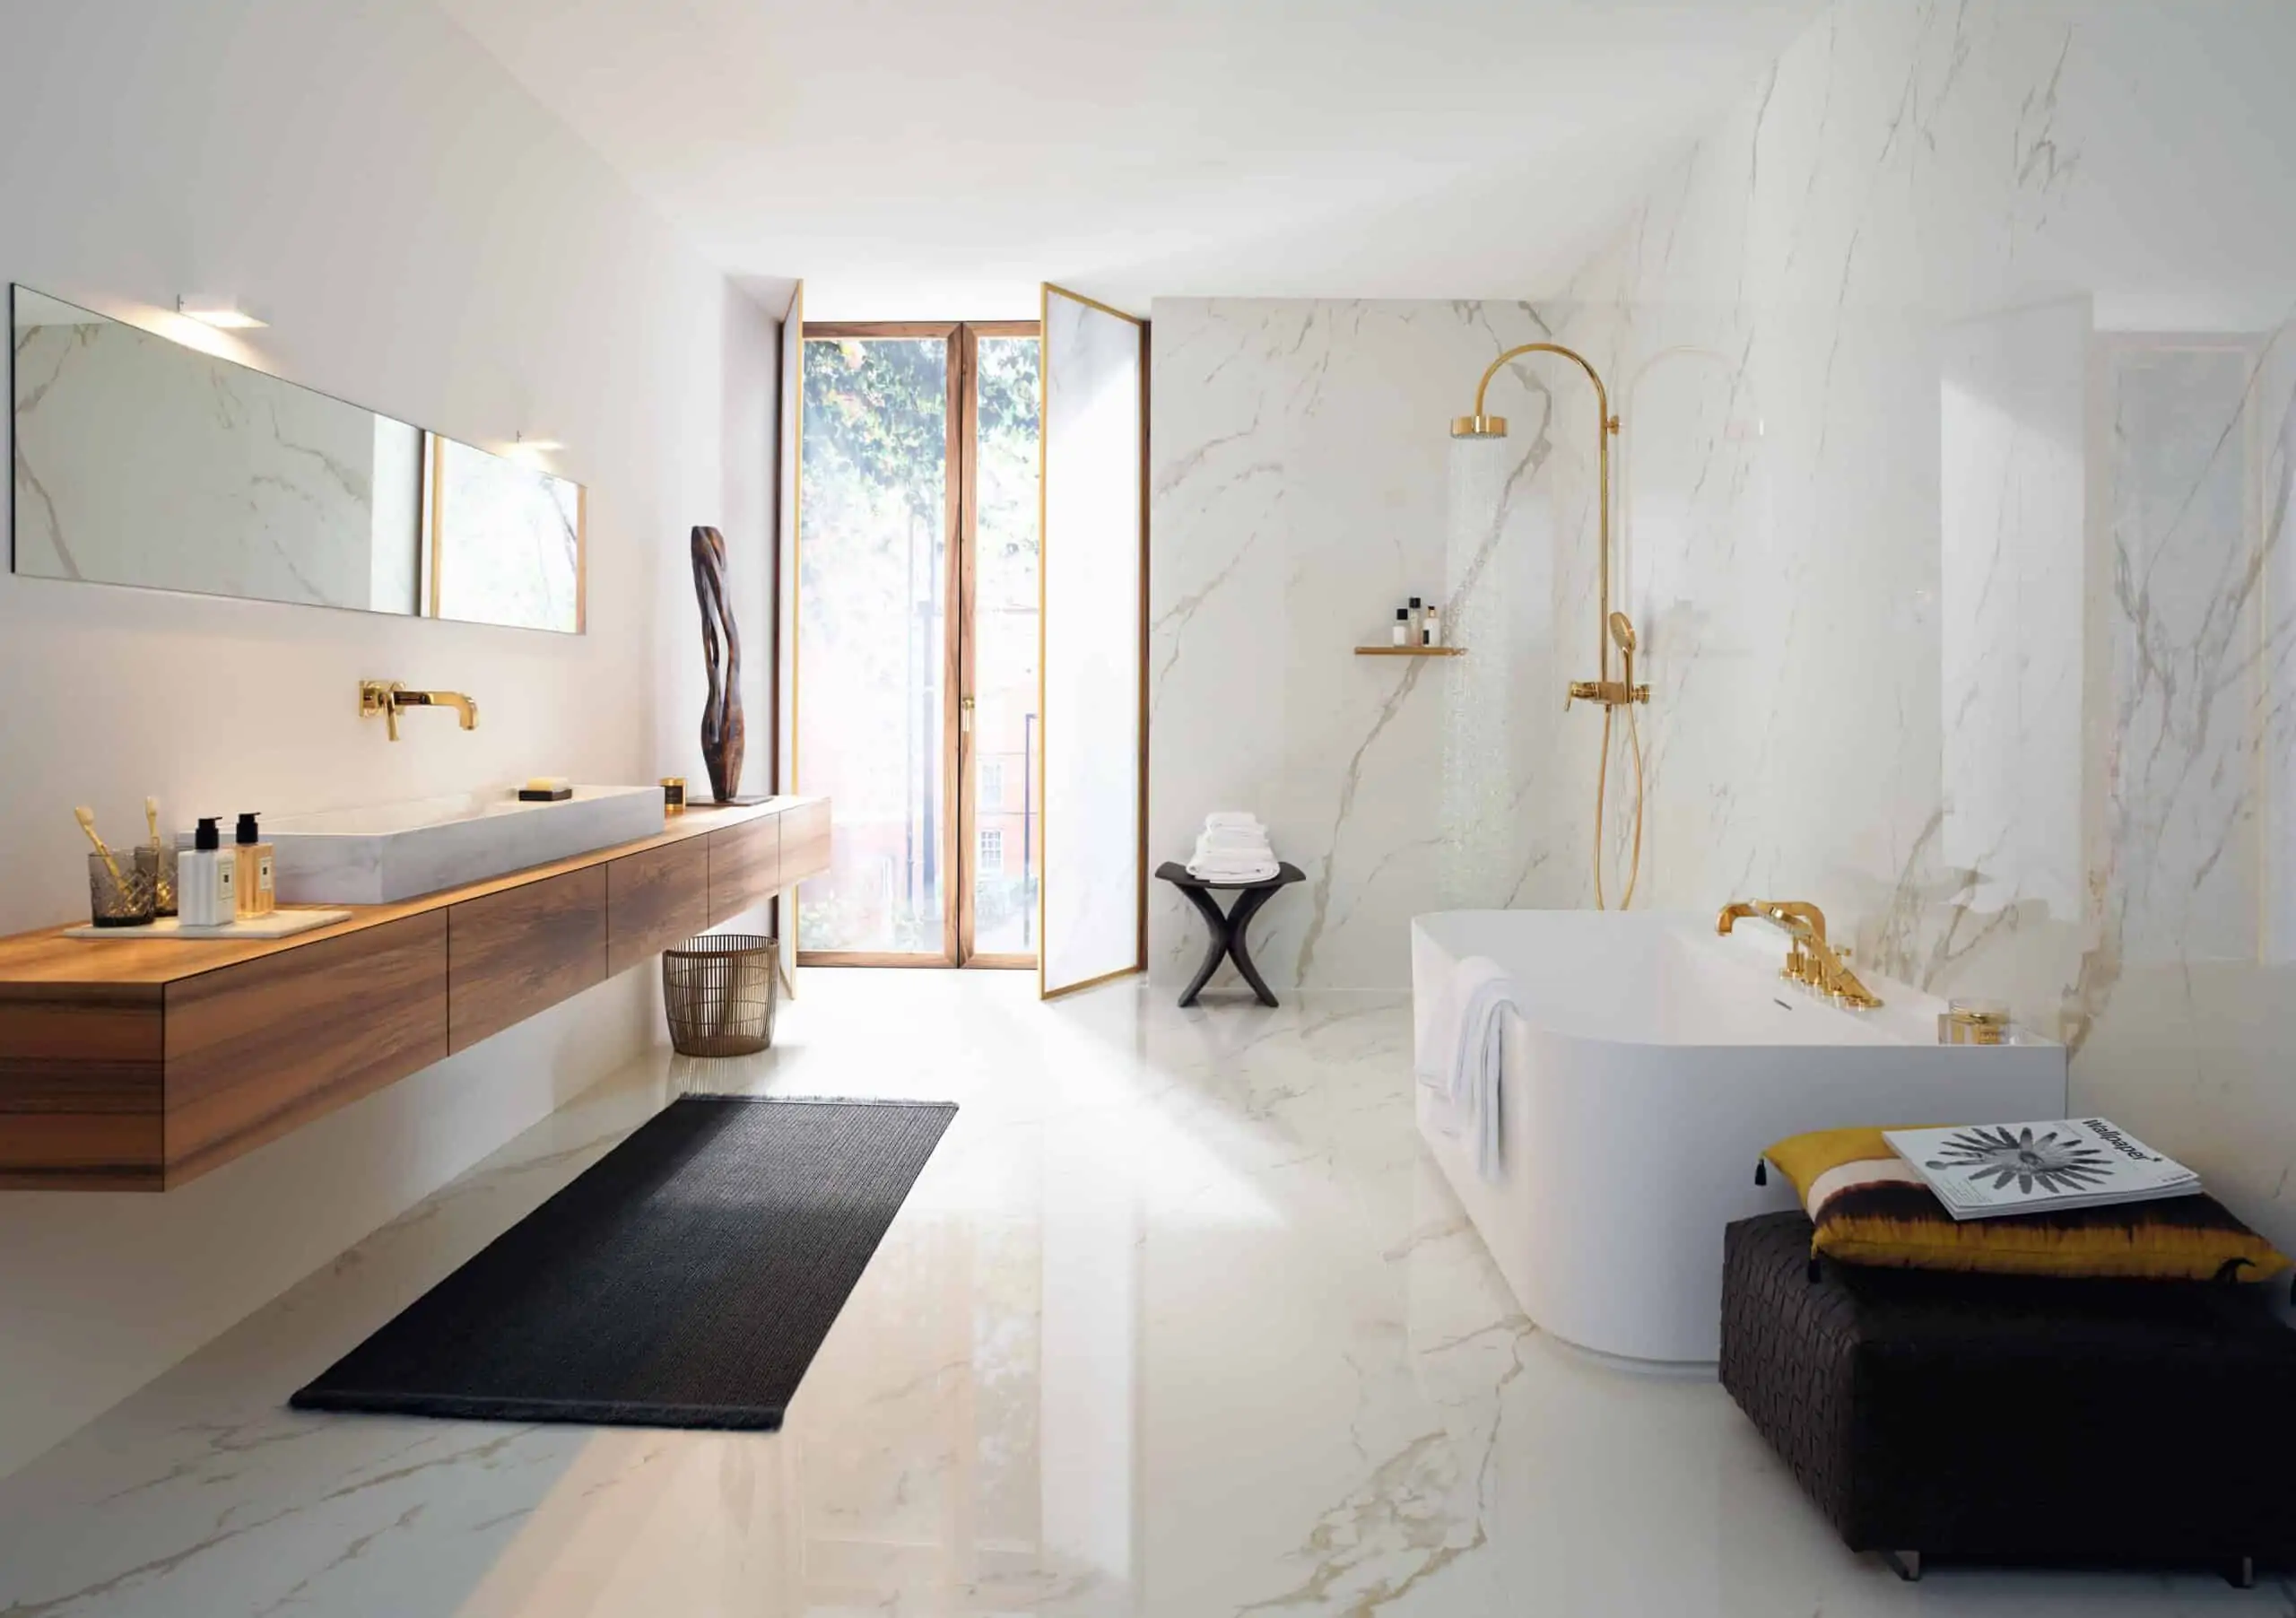 AXOR Citterio modern bathroom design collection, white and gold themed bathroom